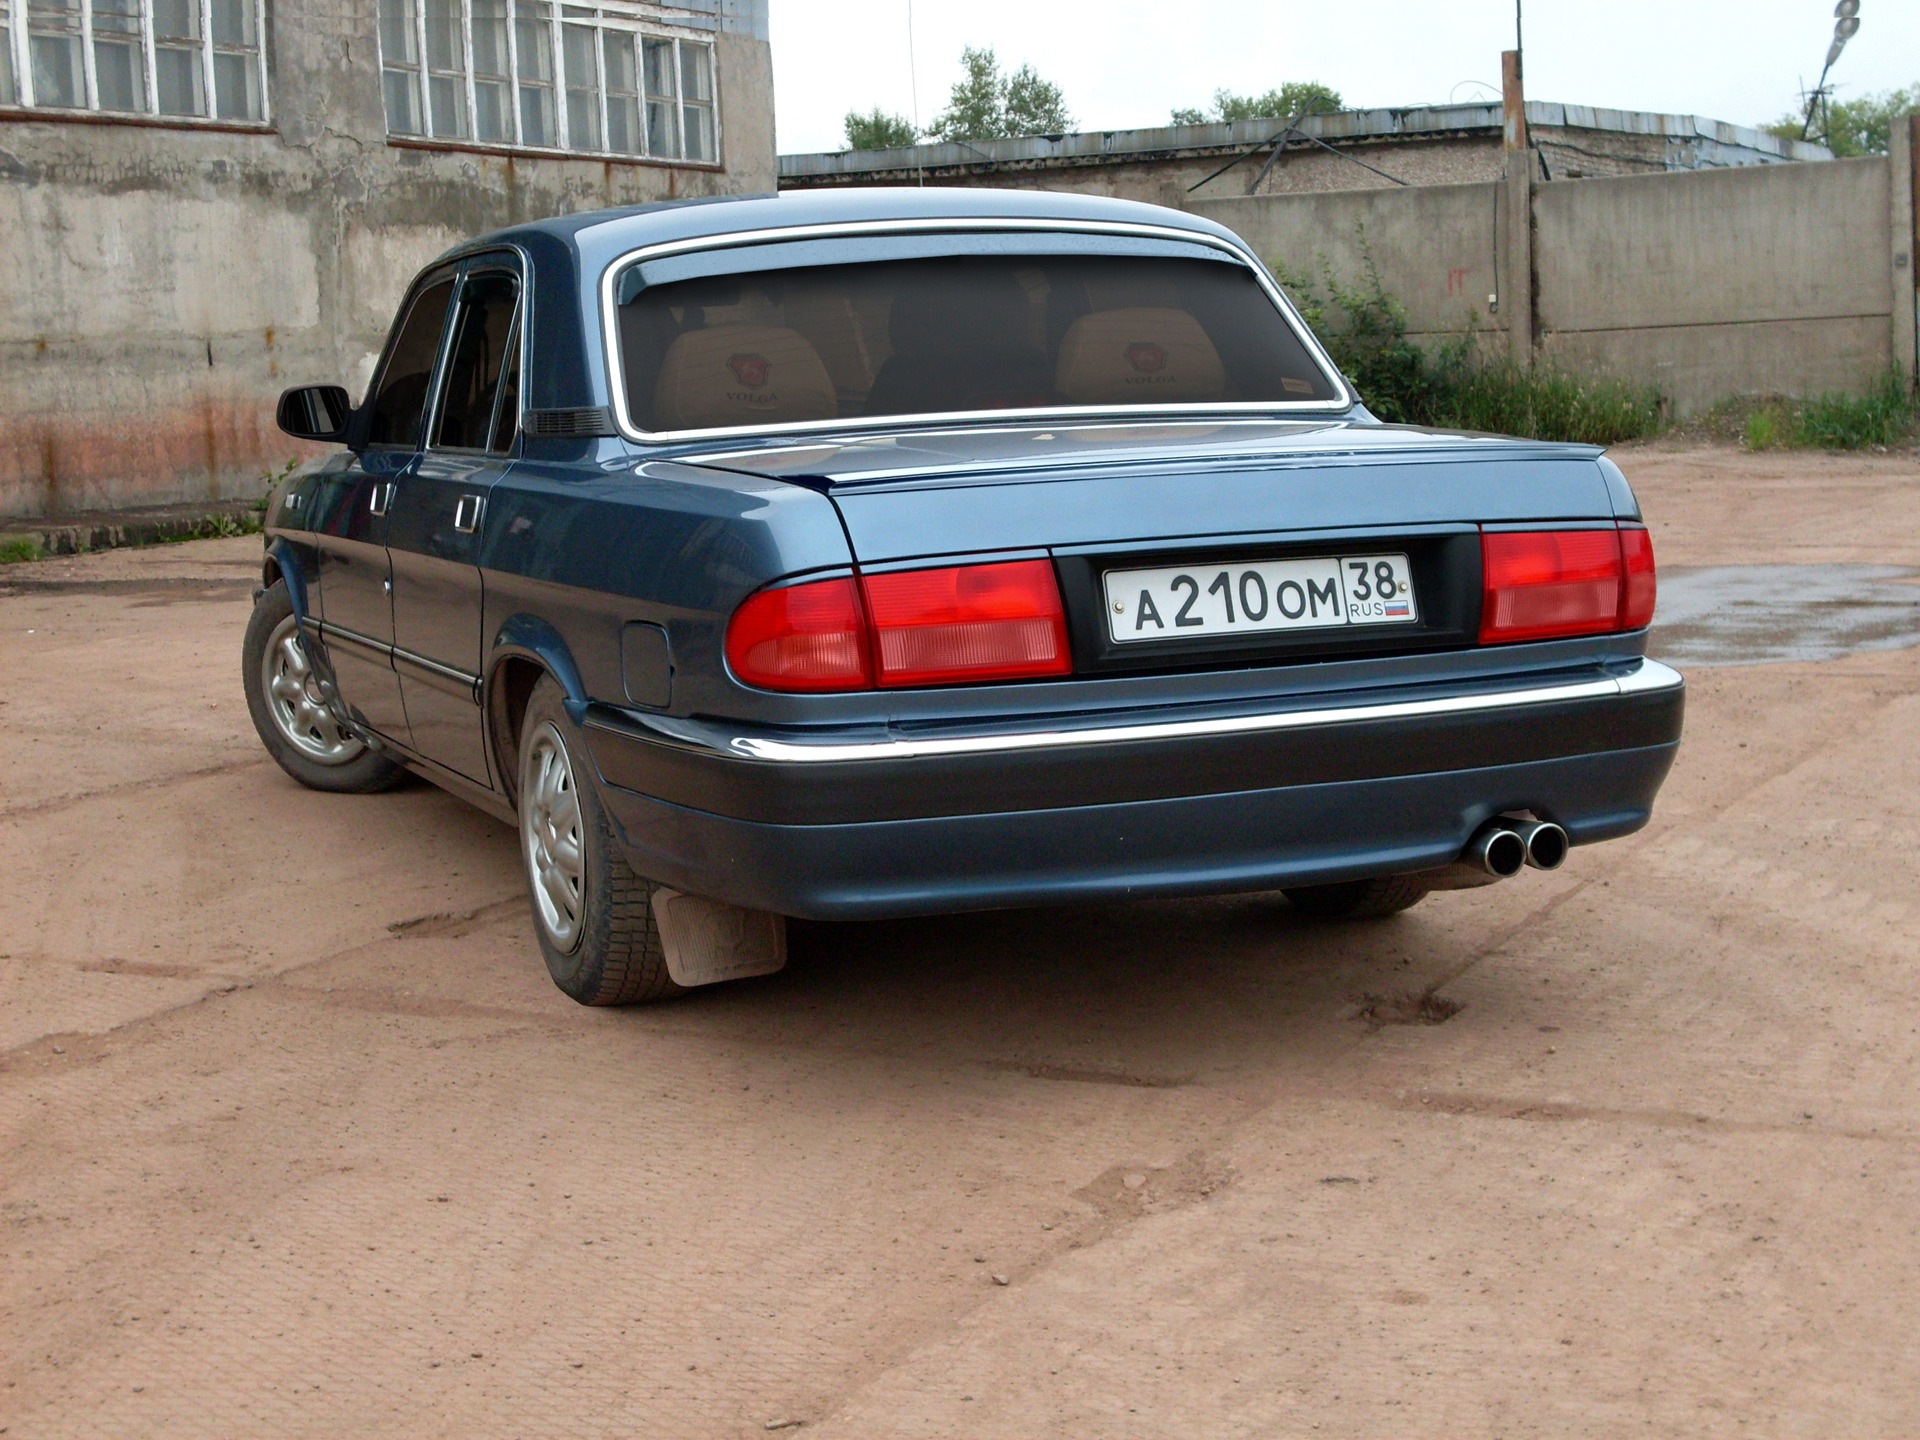 Задние фары ГАЗ 3110